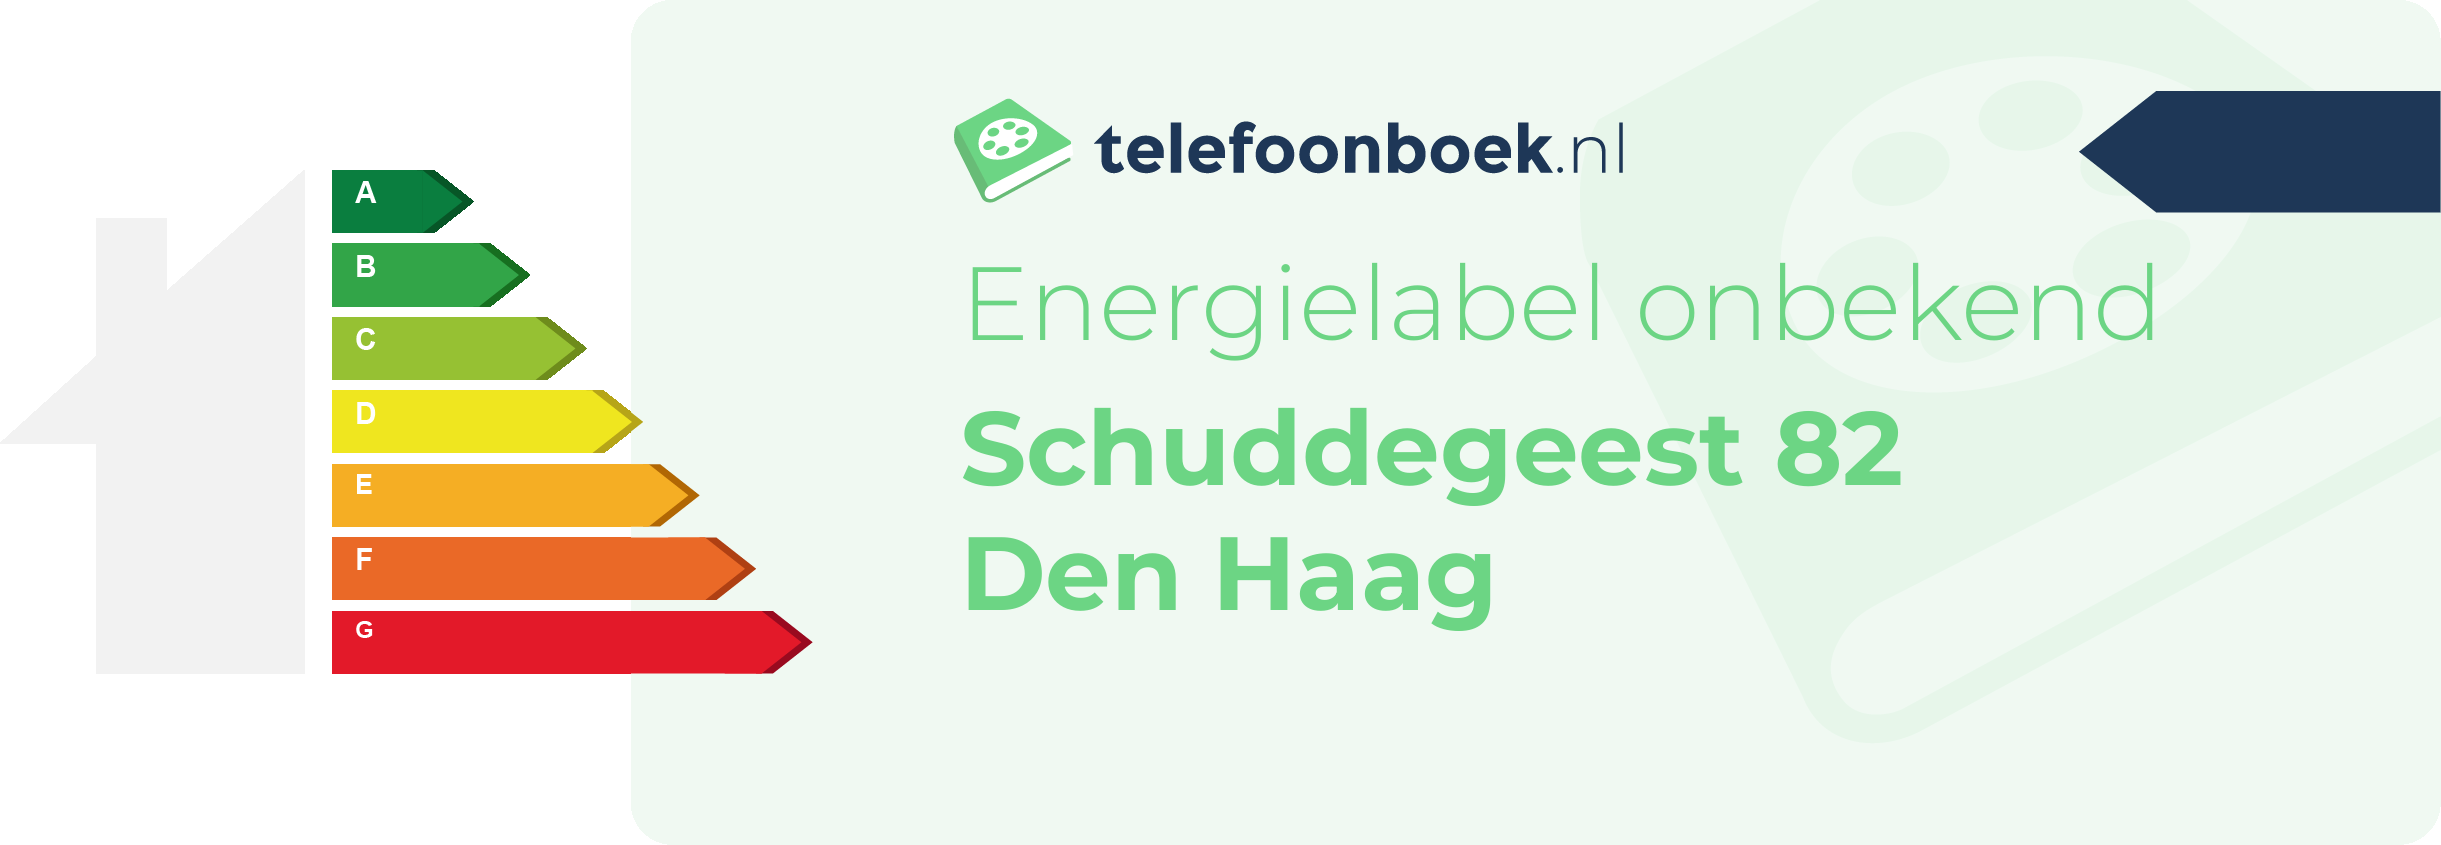 Energielabel Schuddegeest 82 Den Haag